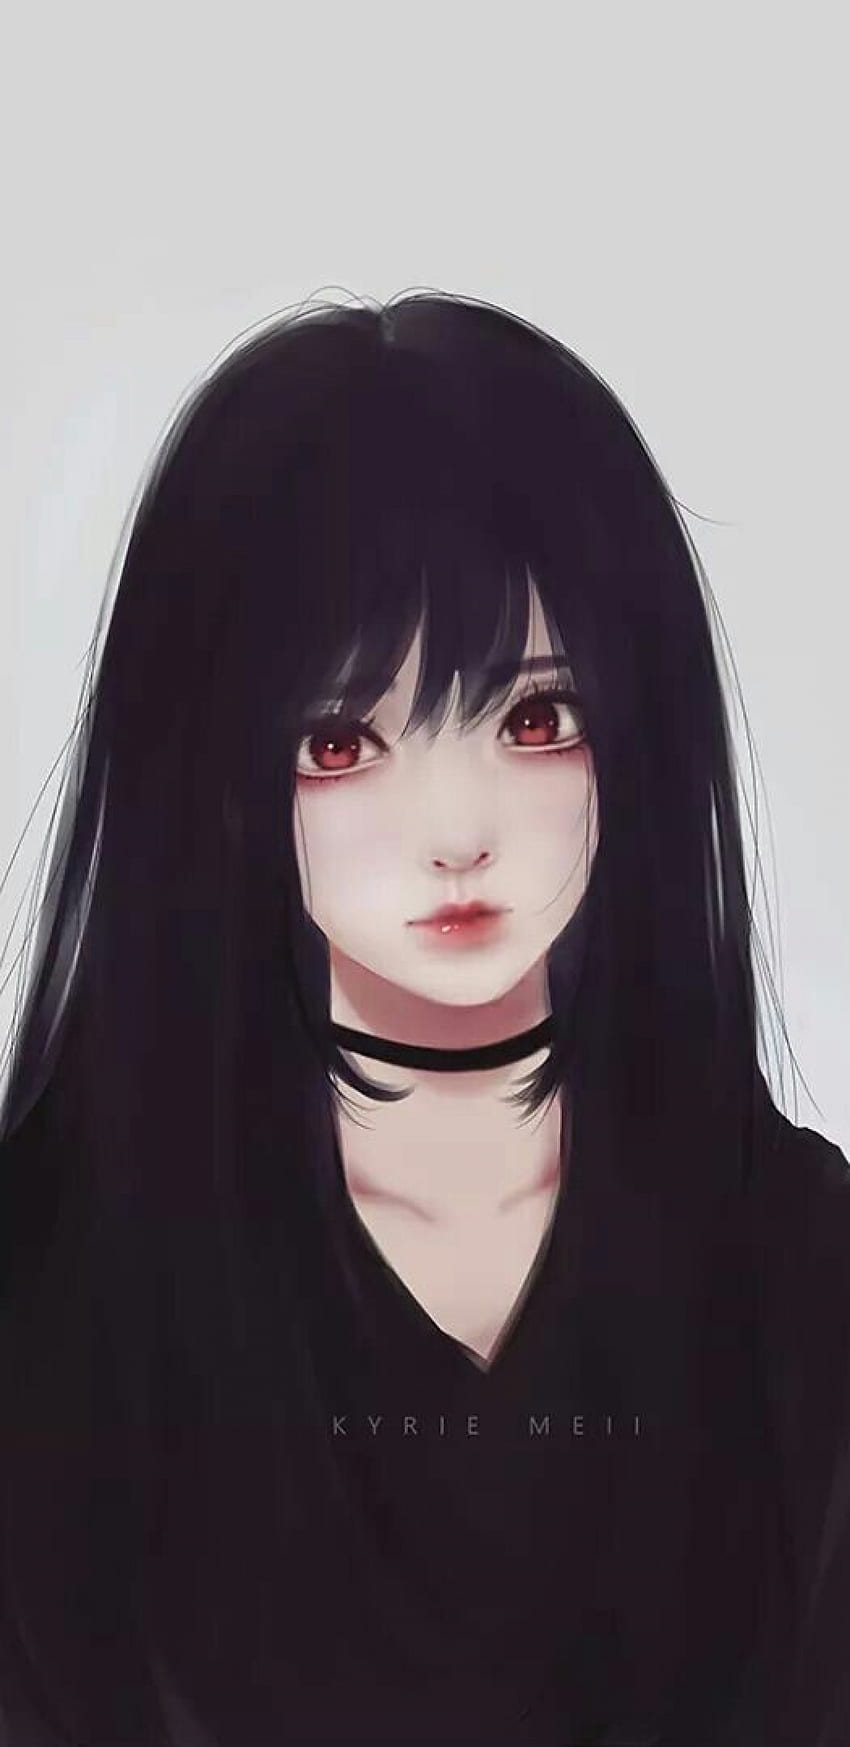 Profil, Gadis Anime Emo wallpaper ponsel HD